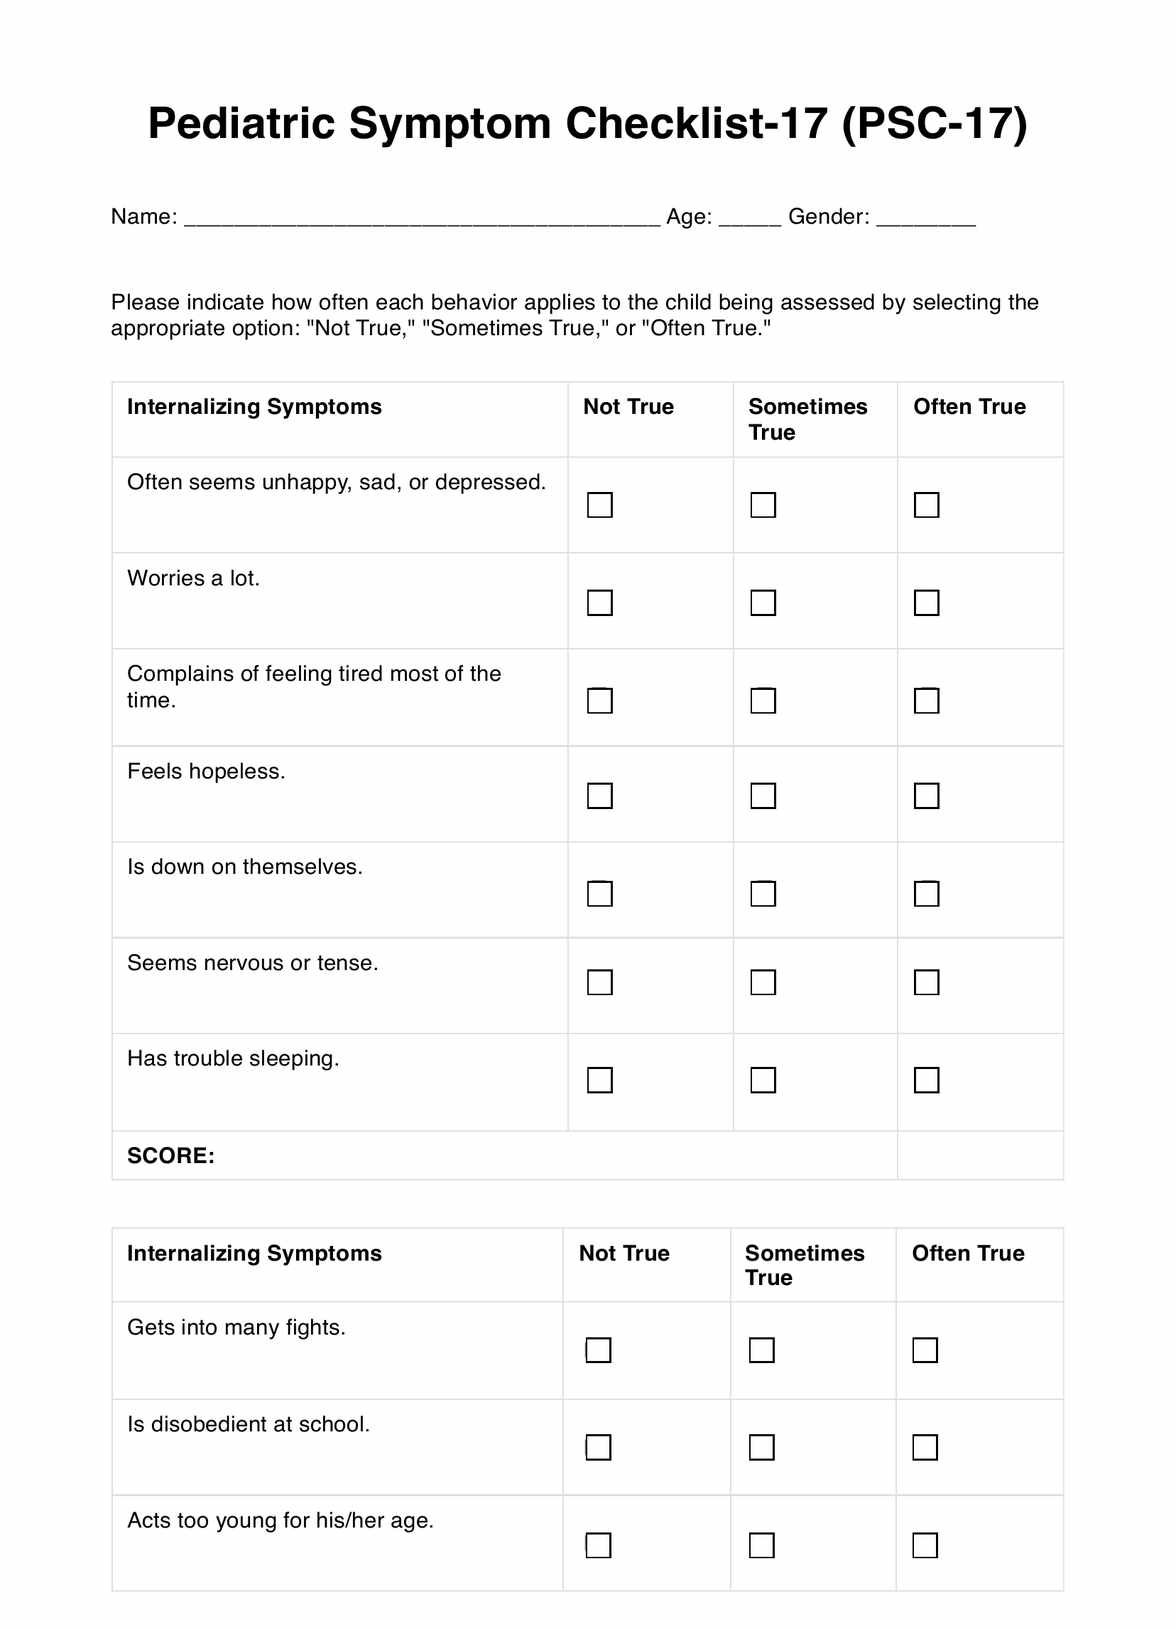 Pediatric Symptom Checklist-17 (PSC-17) PDF Example